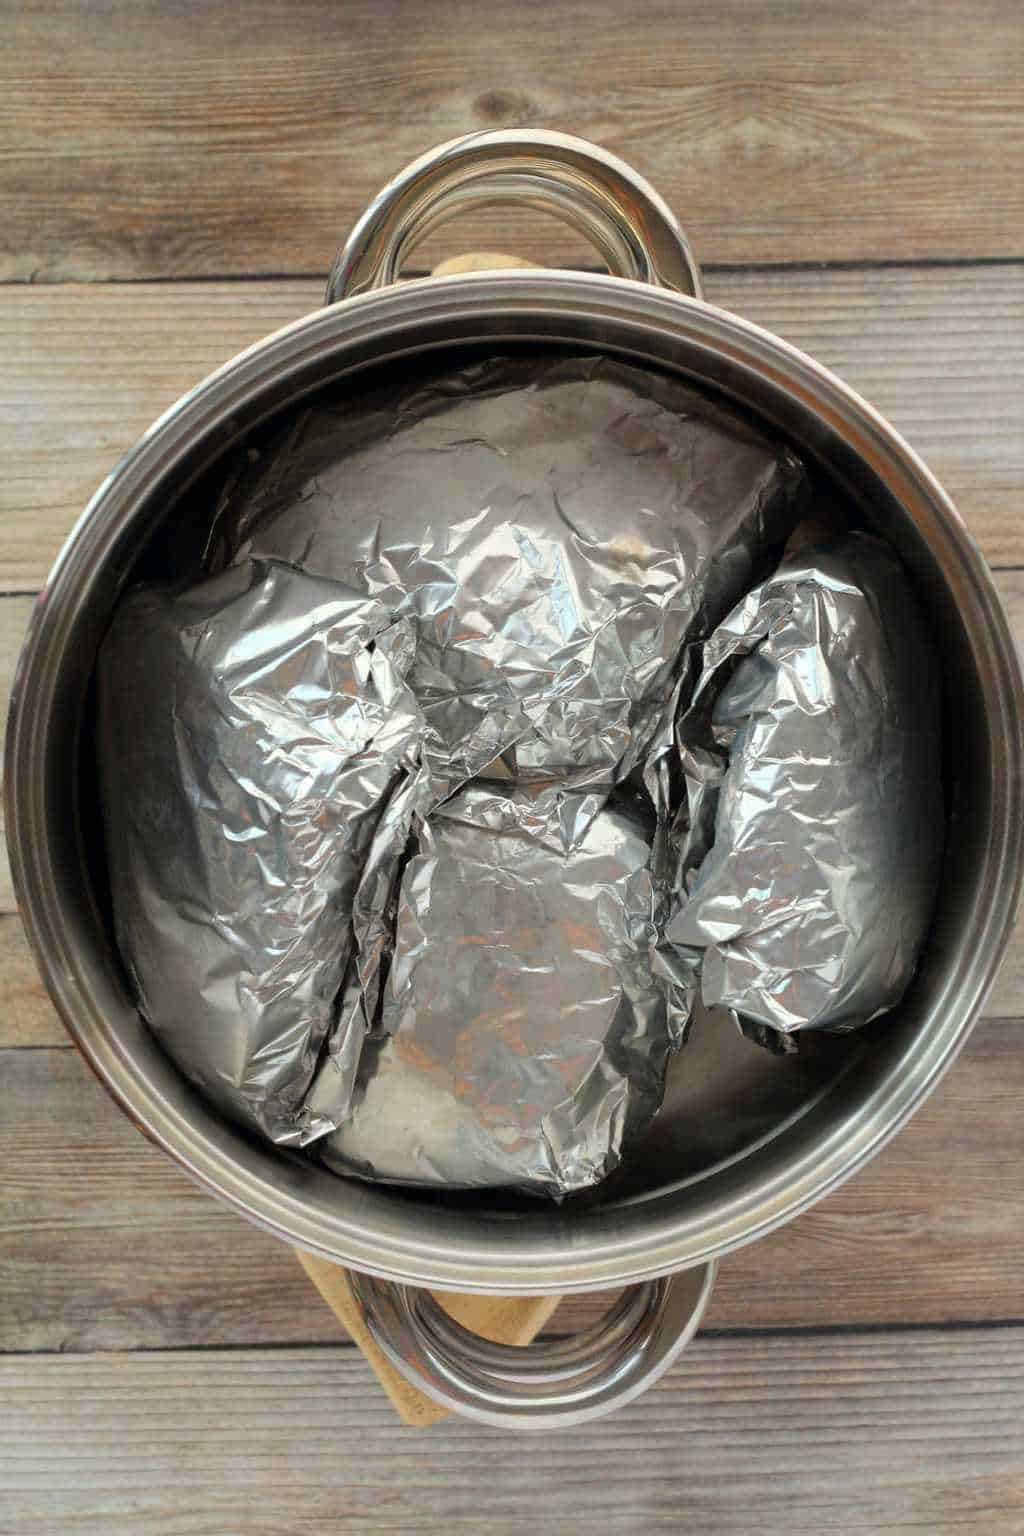 Vegan Steaks wrapped in tinfoil in a steamer basket. 